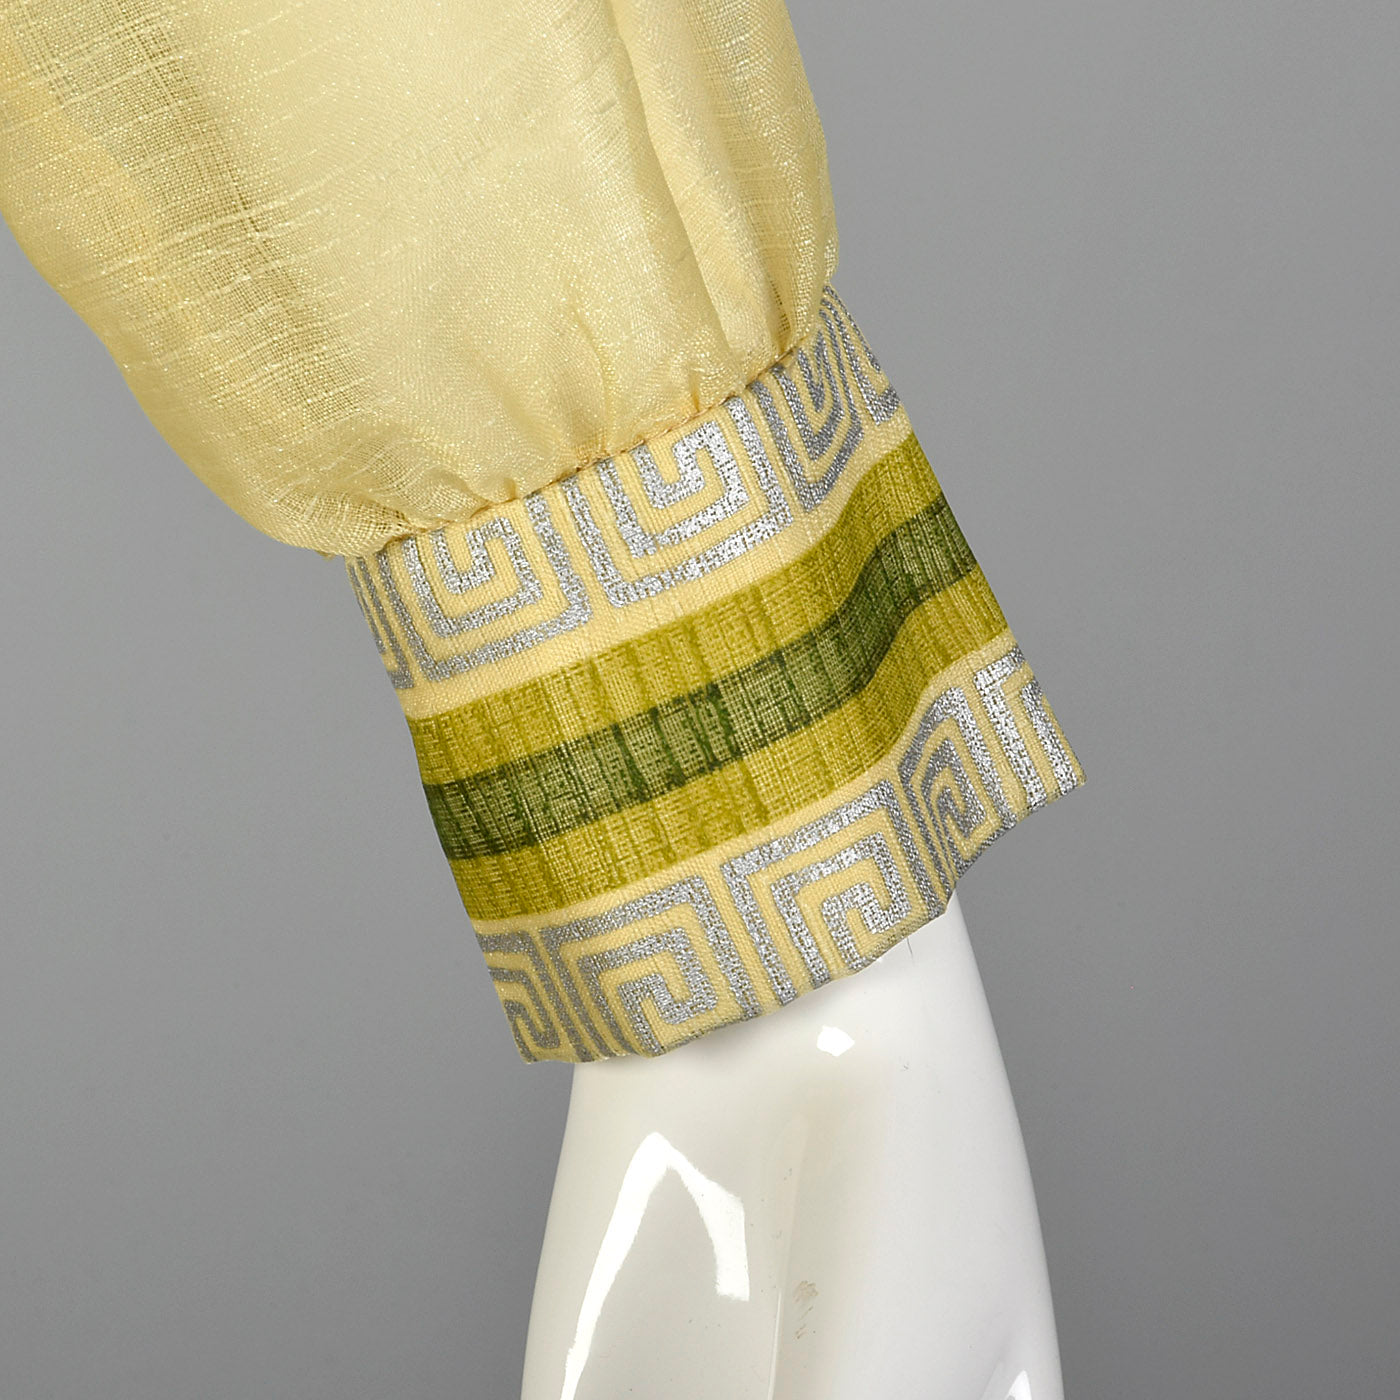 1970s Alfred Shaheen Yellow Maxi Dress